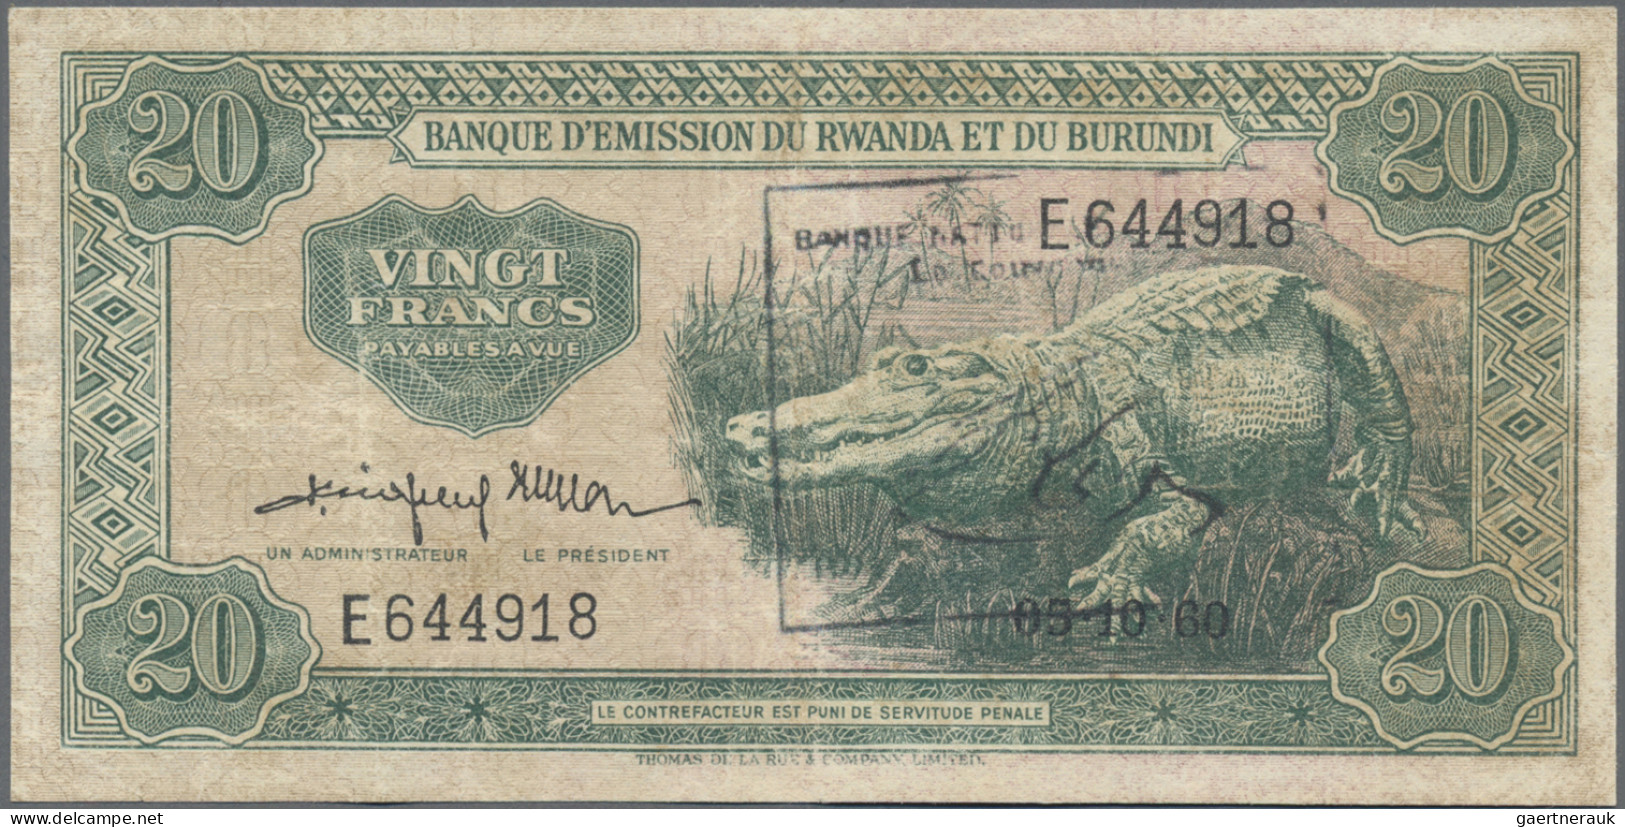 Rwanda: Banque Nationale Du Rwanda, 20 Francs 1960 (1962) With Handstamp "Banque - Rwanda